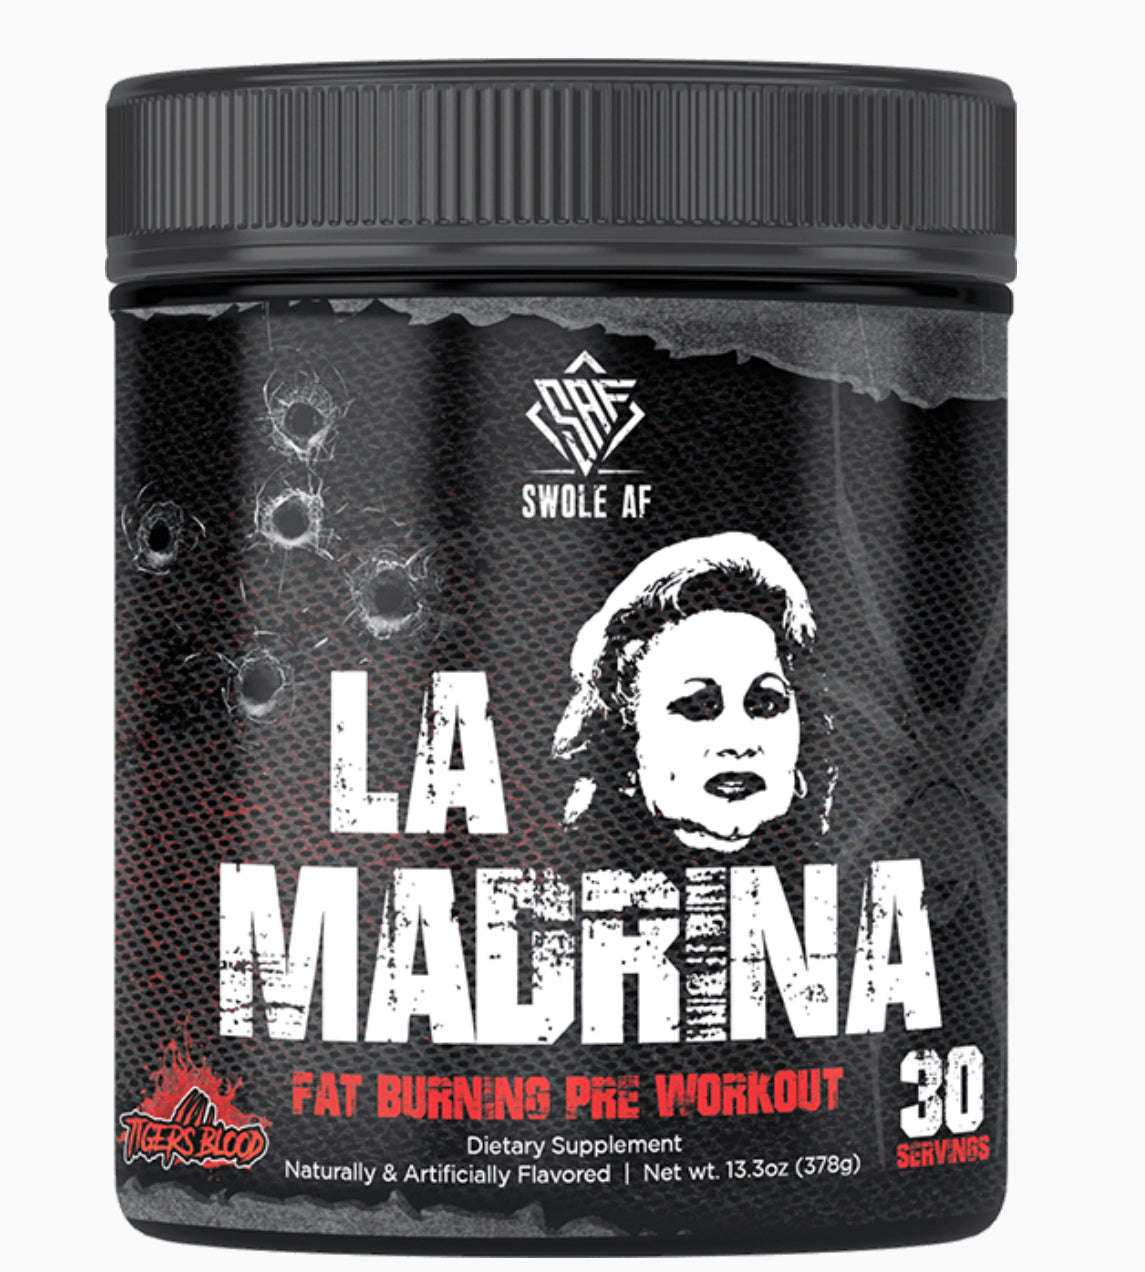 LA MADRINA – FAT BURNING PRE WORKOUT